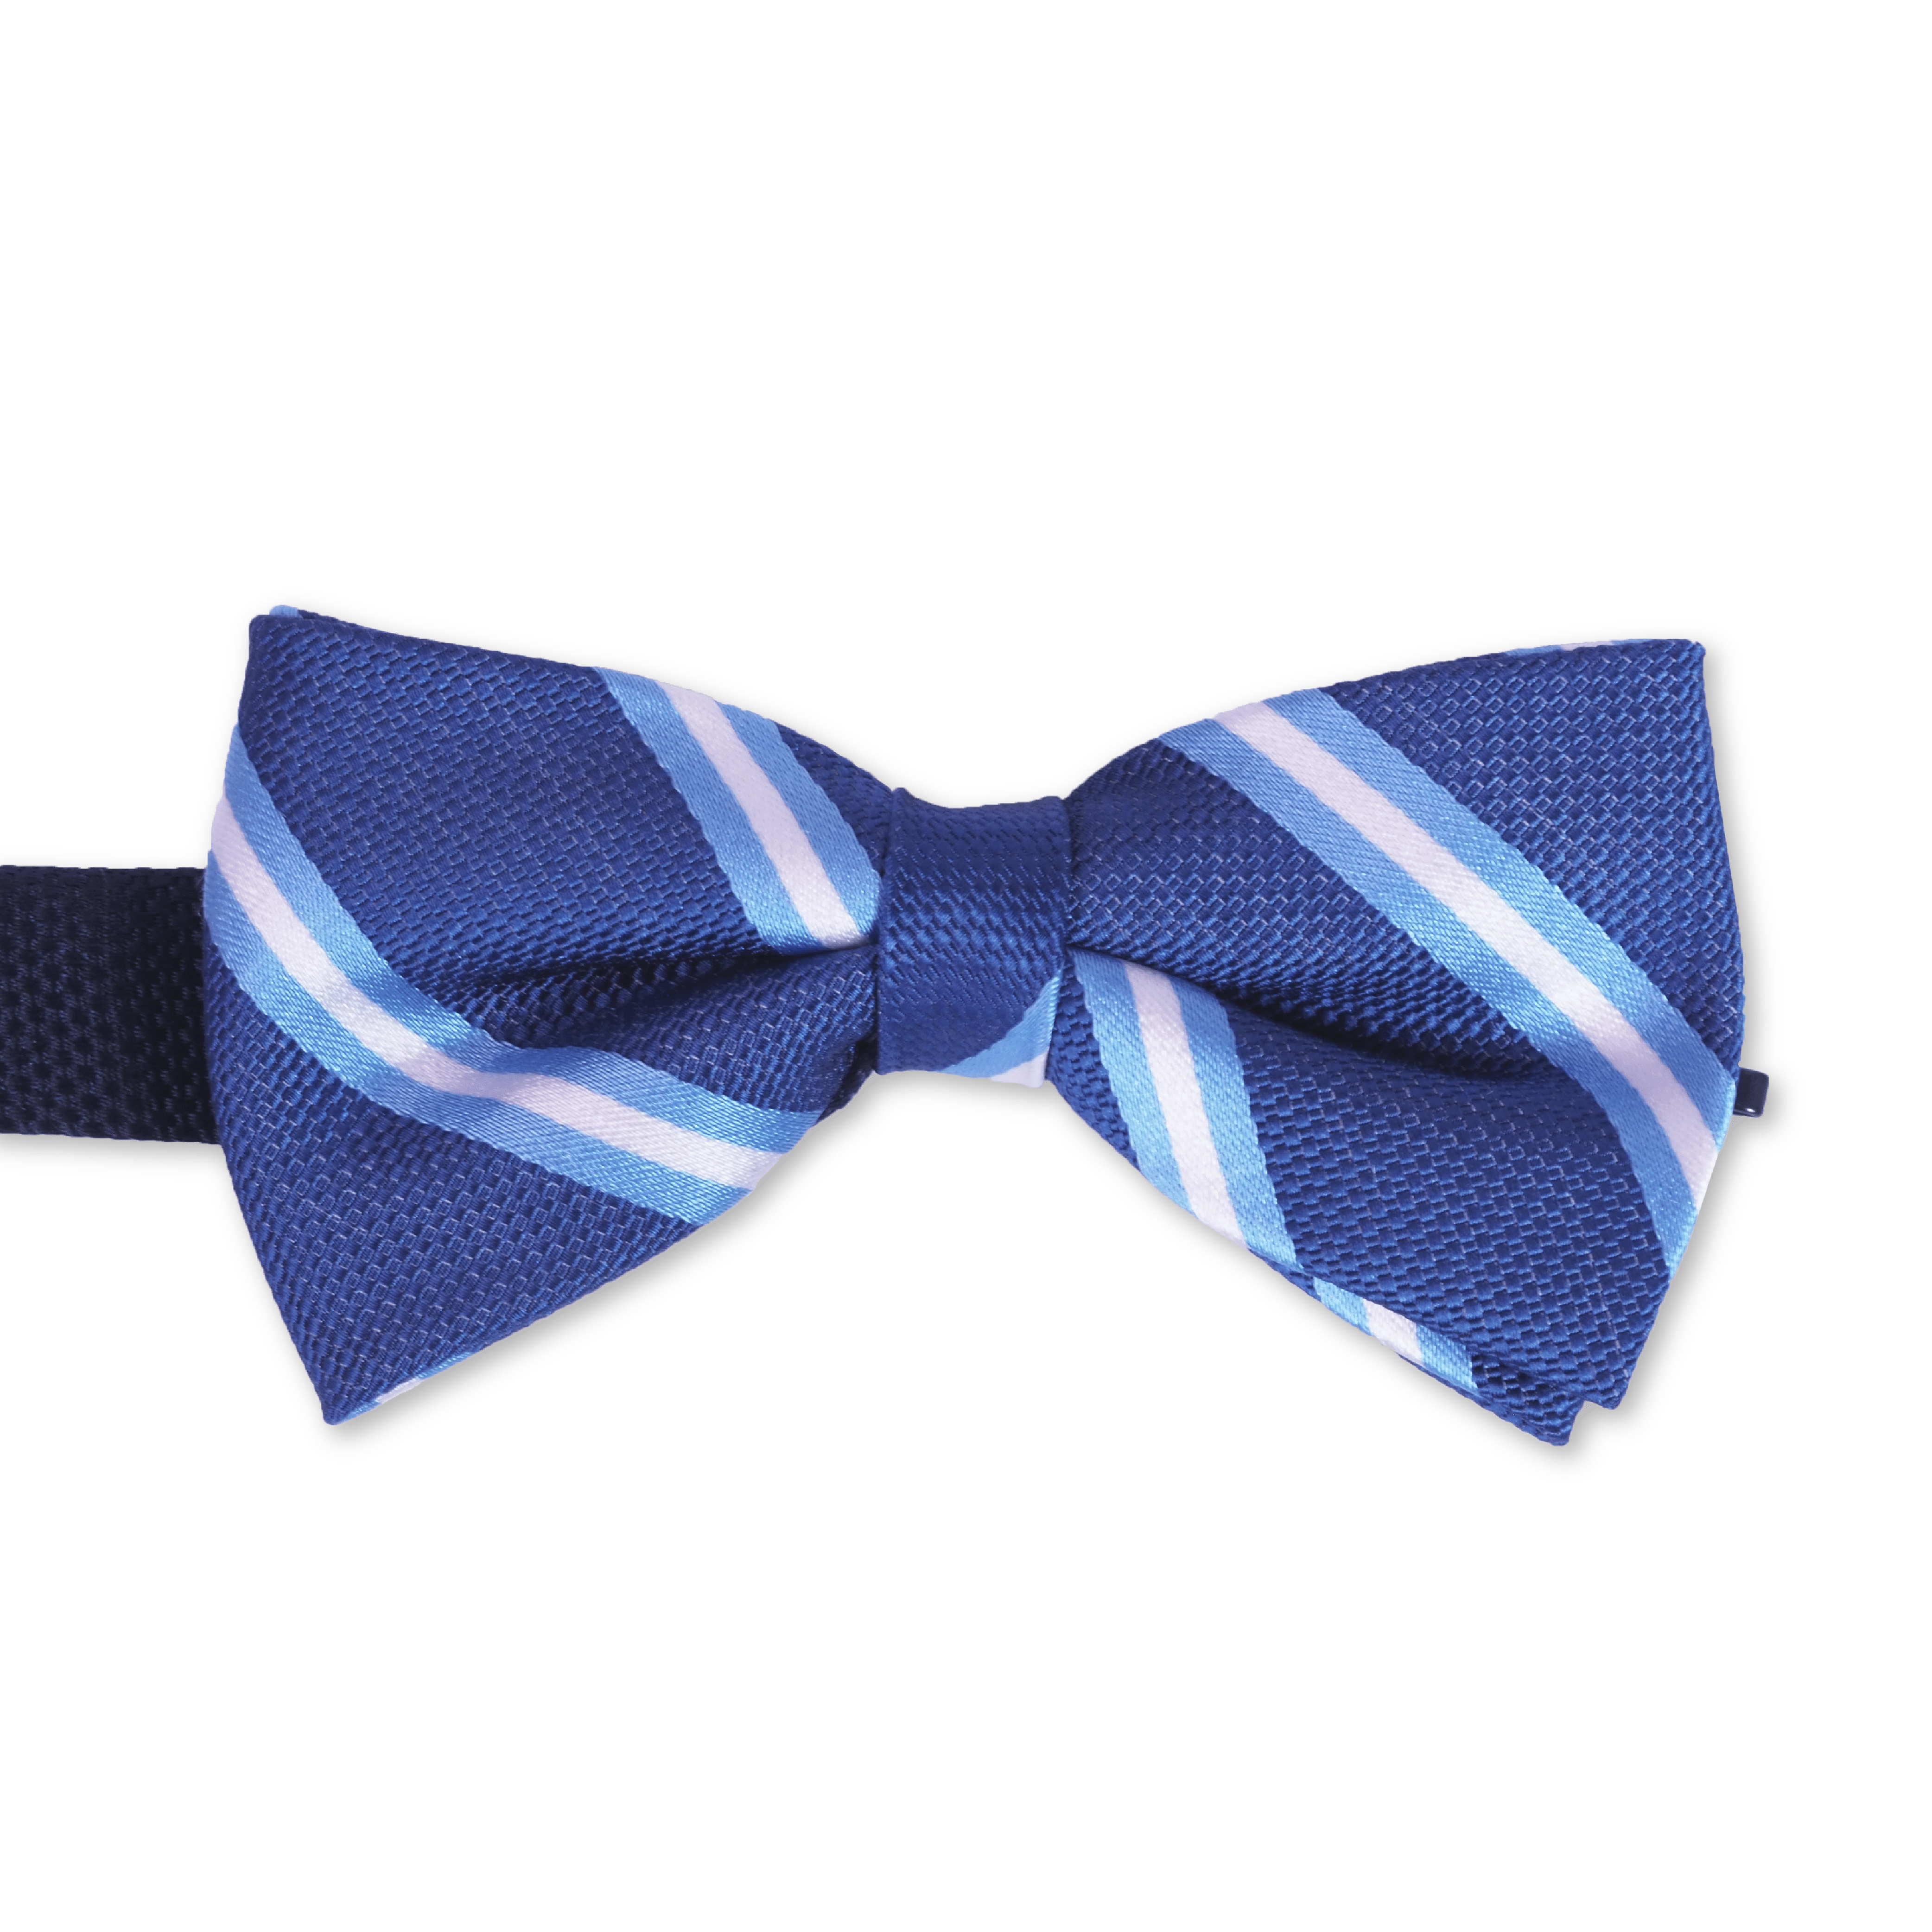 Sailor's Stripes Bow Tie (100% Silk)